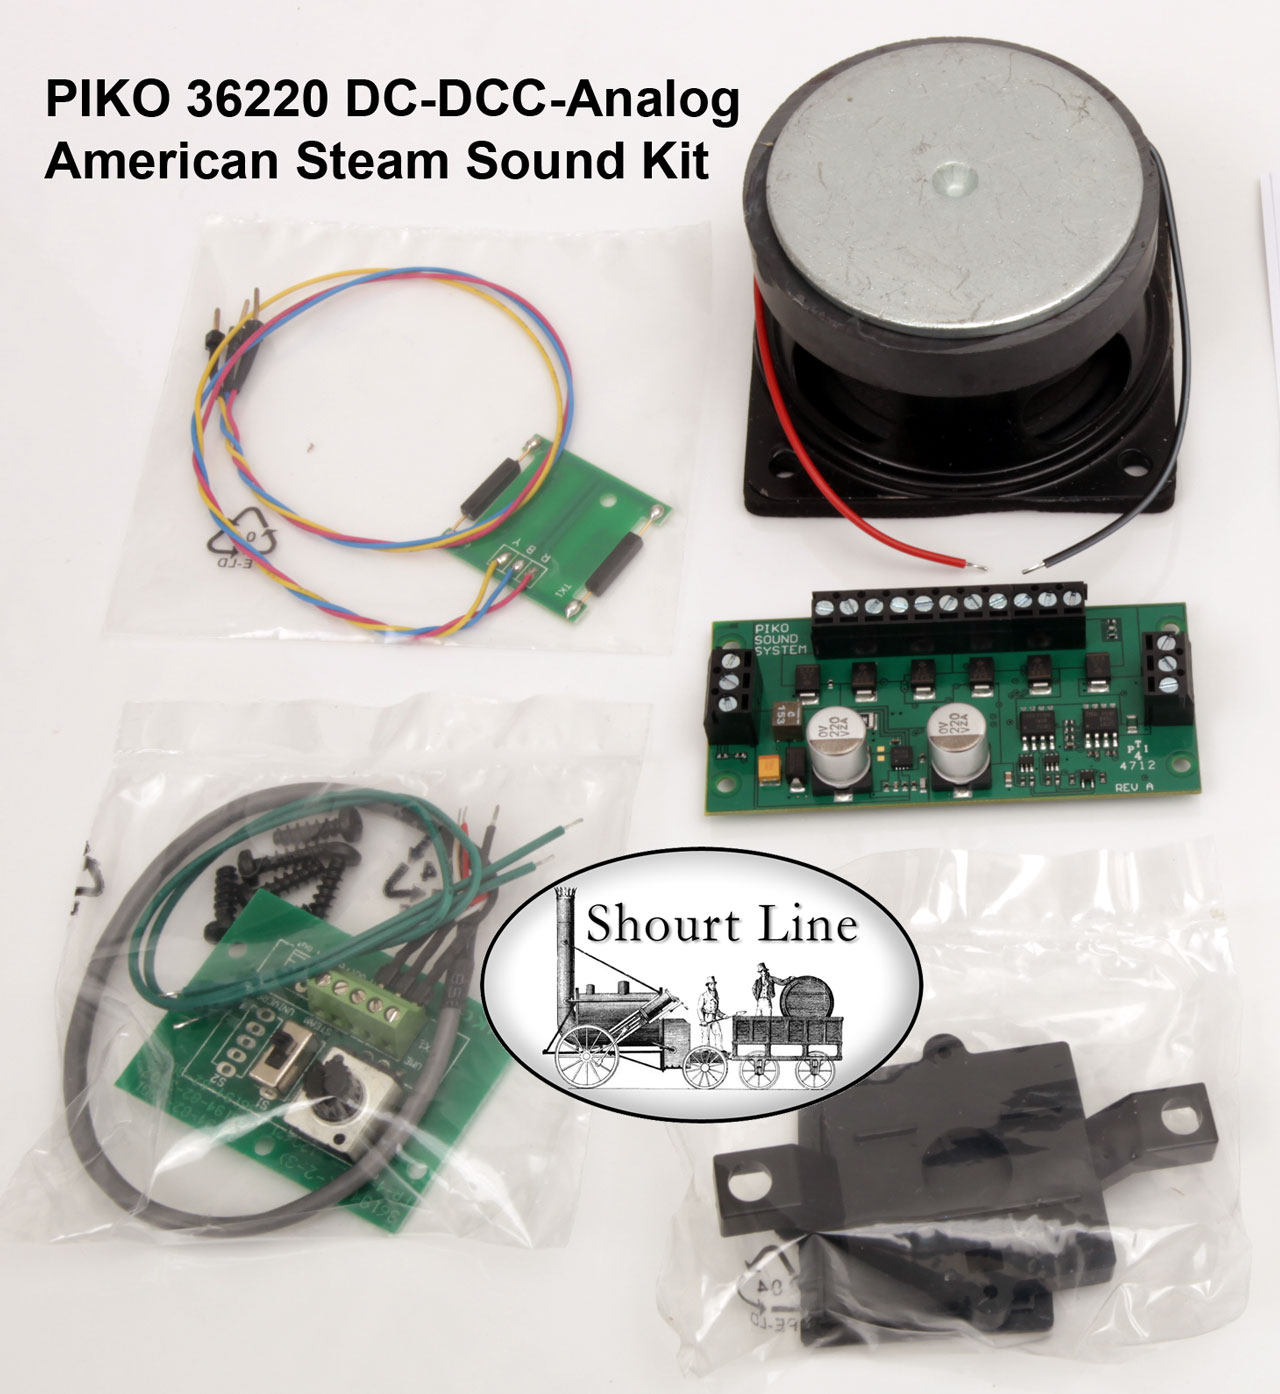 PIKO 36220 DC-DCC-Analog American Steam Sound Motor Decoder Kit parts of kits